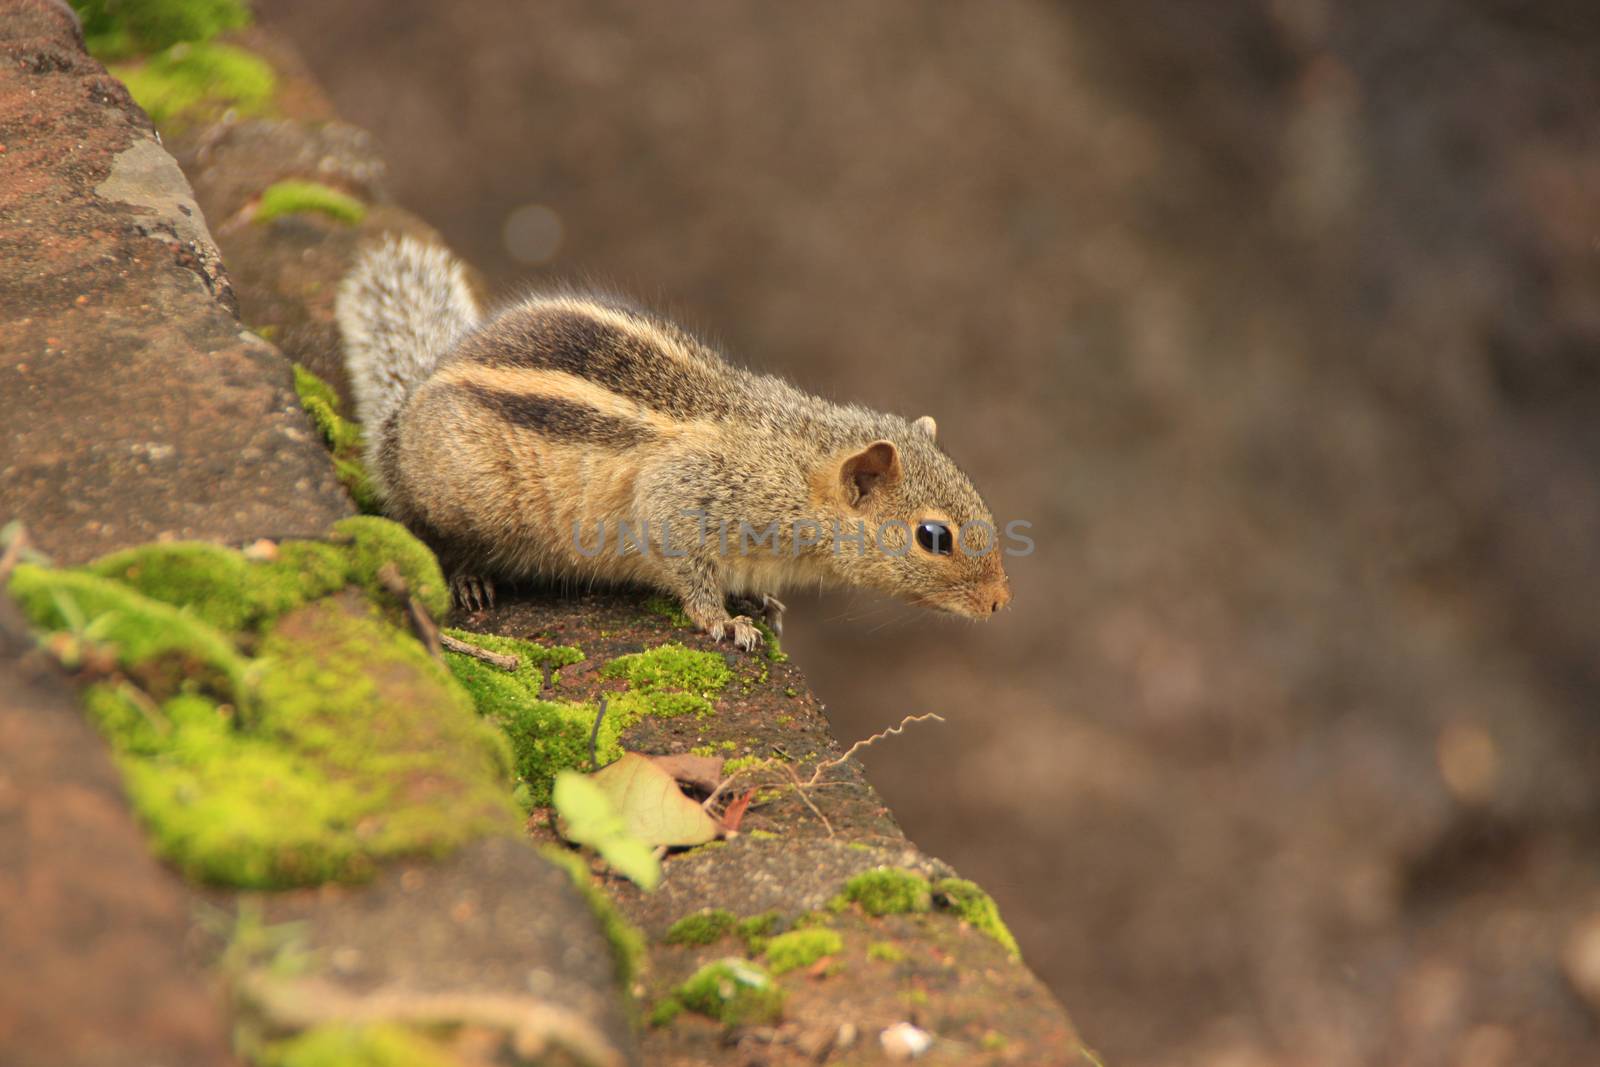 Nothern palm squirrel (Funambulus pennantii) sitting on stone wa by donya_nedomam